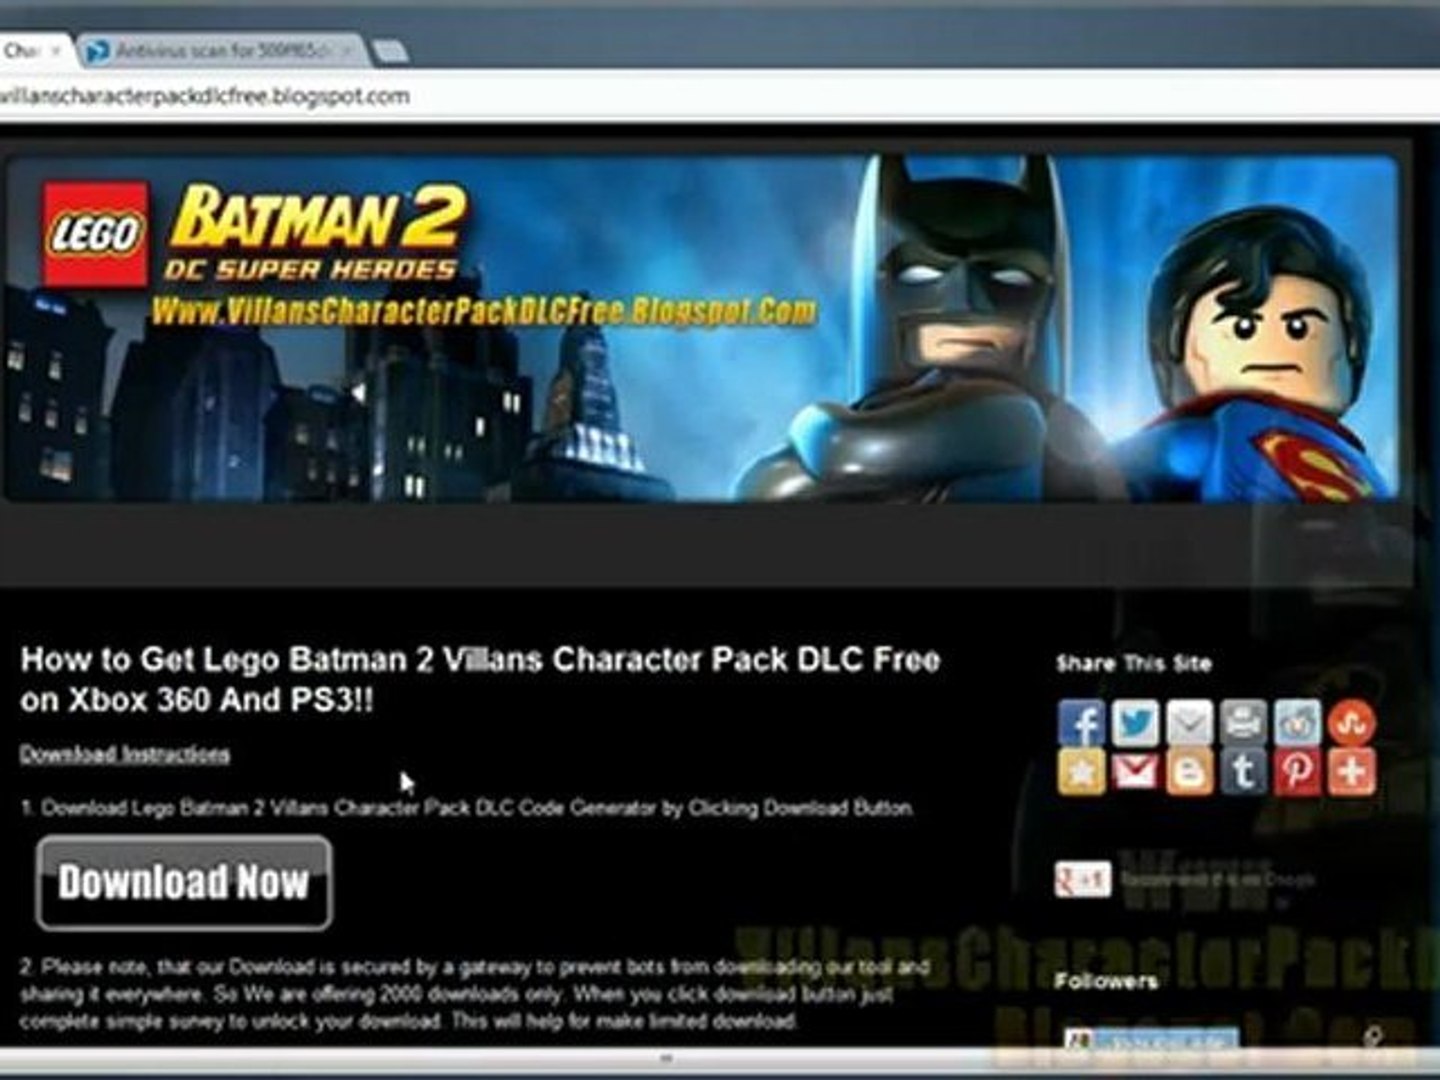 Lego Batman 2 Villans Character Pack DLC Codes - Free!! - video Dailymotion